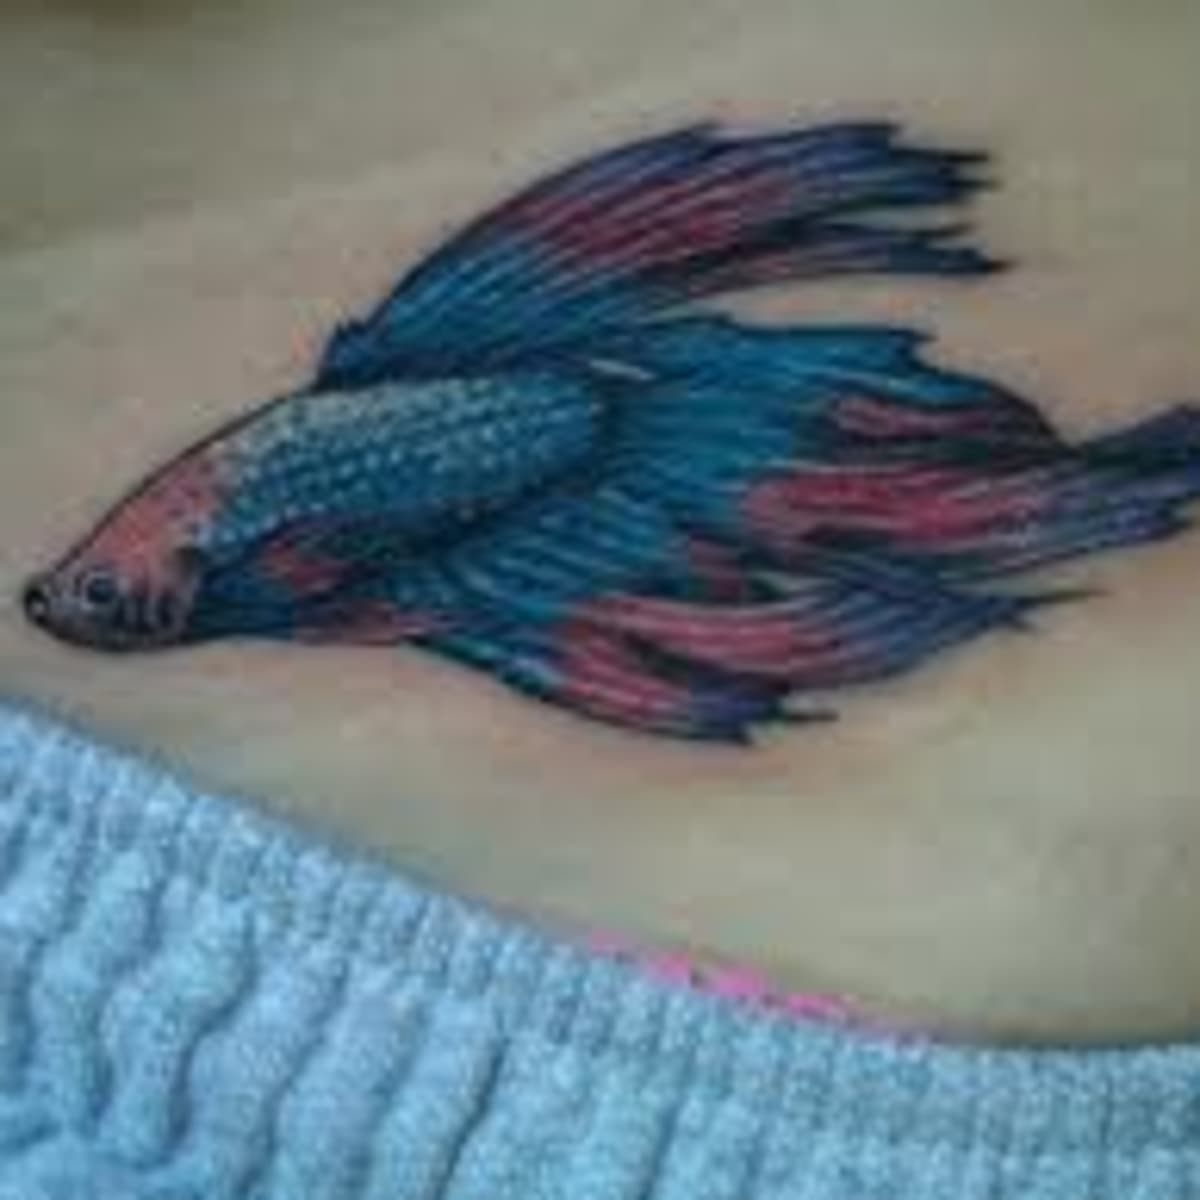 Beta Fish Tattoo - Etsy